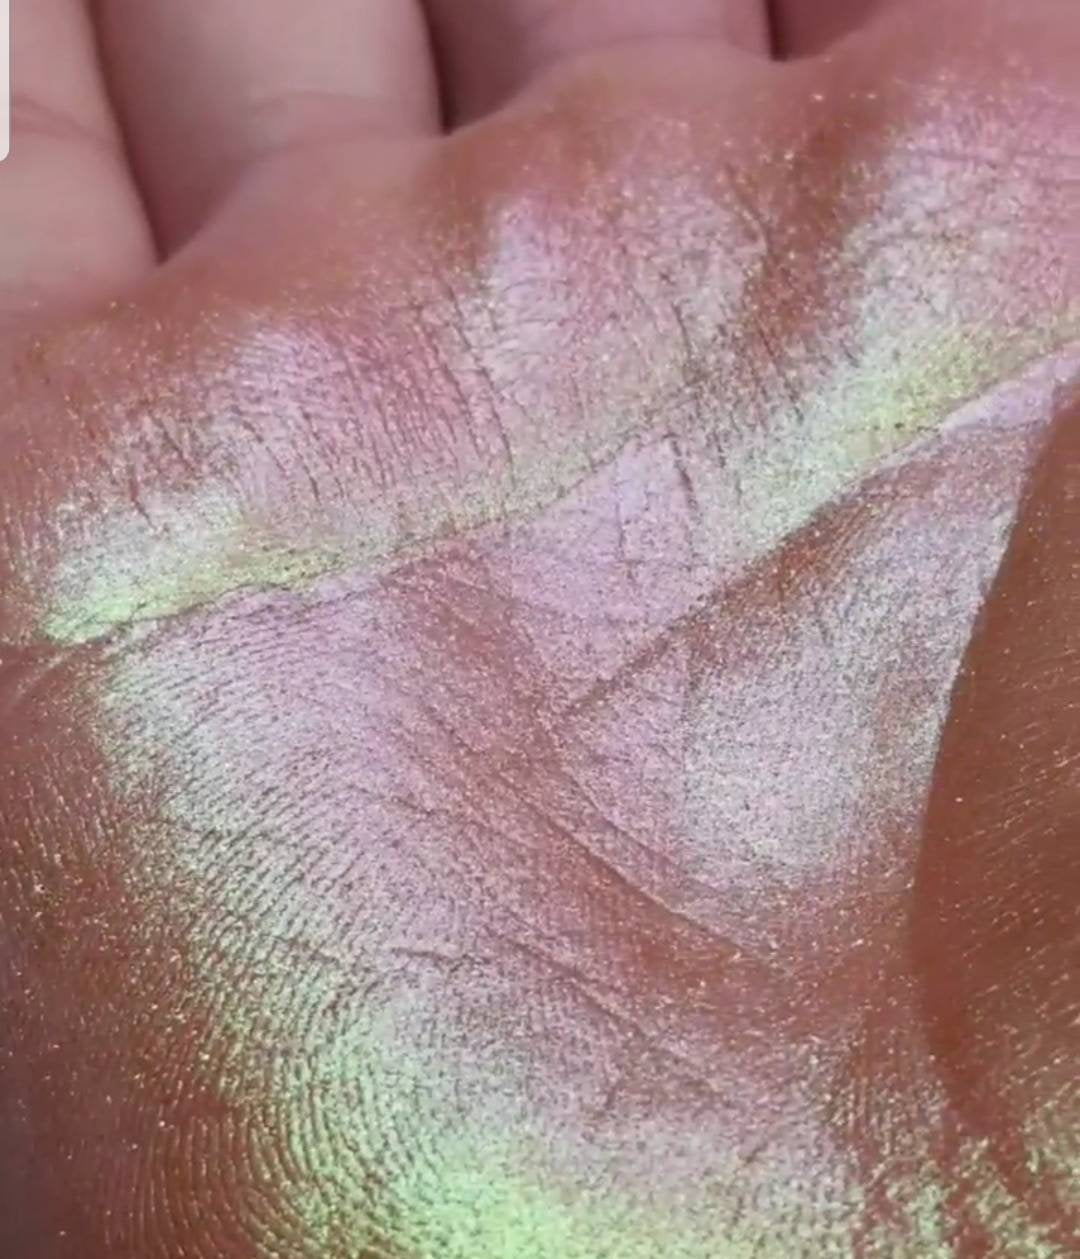 Dahlia - Eyeshadow Multichrome Duochrome Green Gold Peach Pink